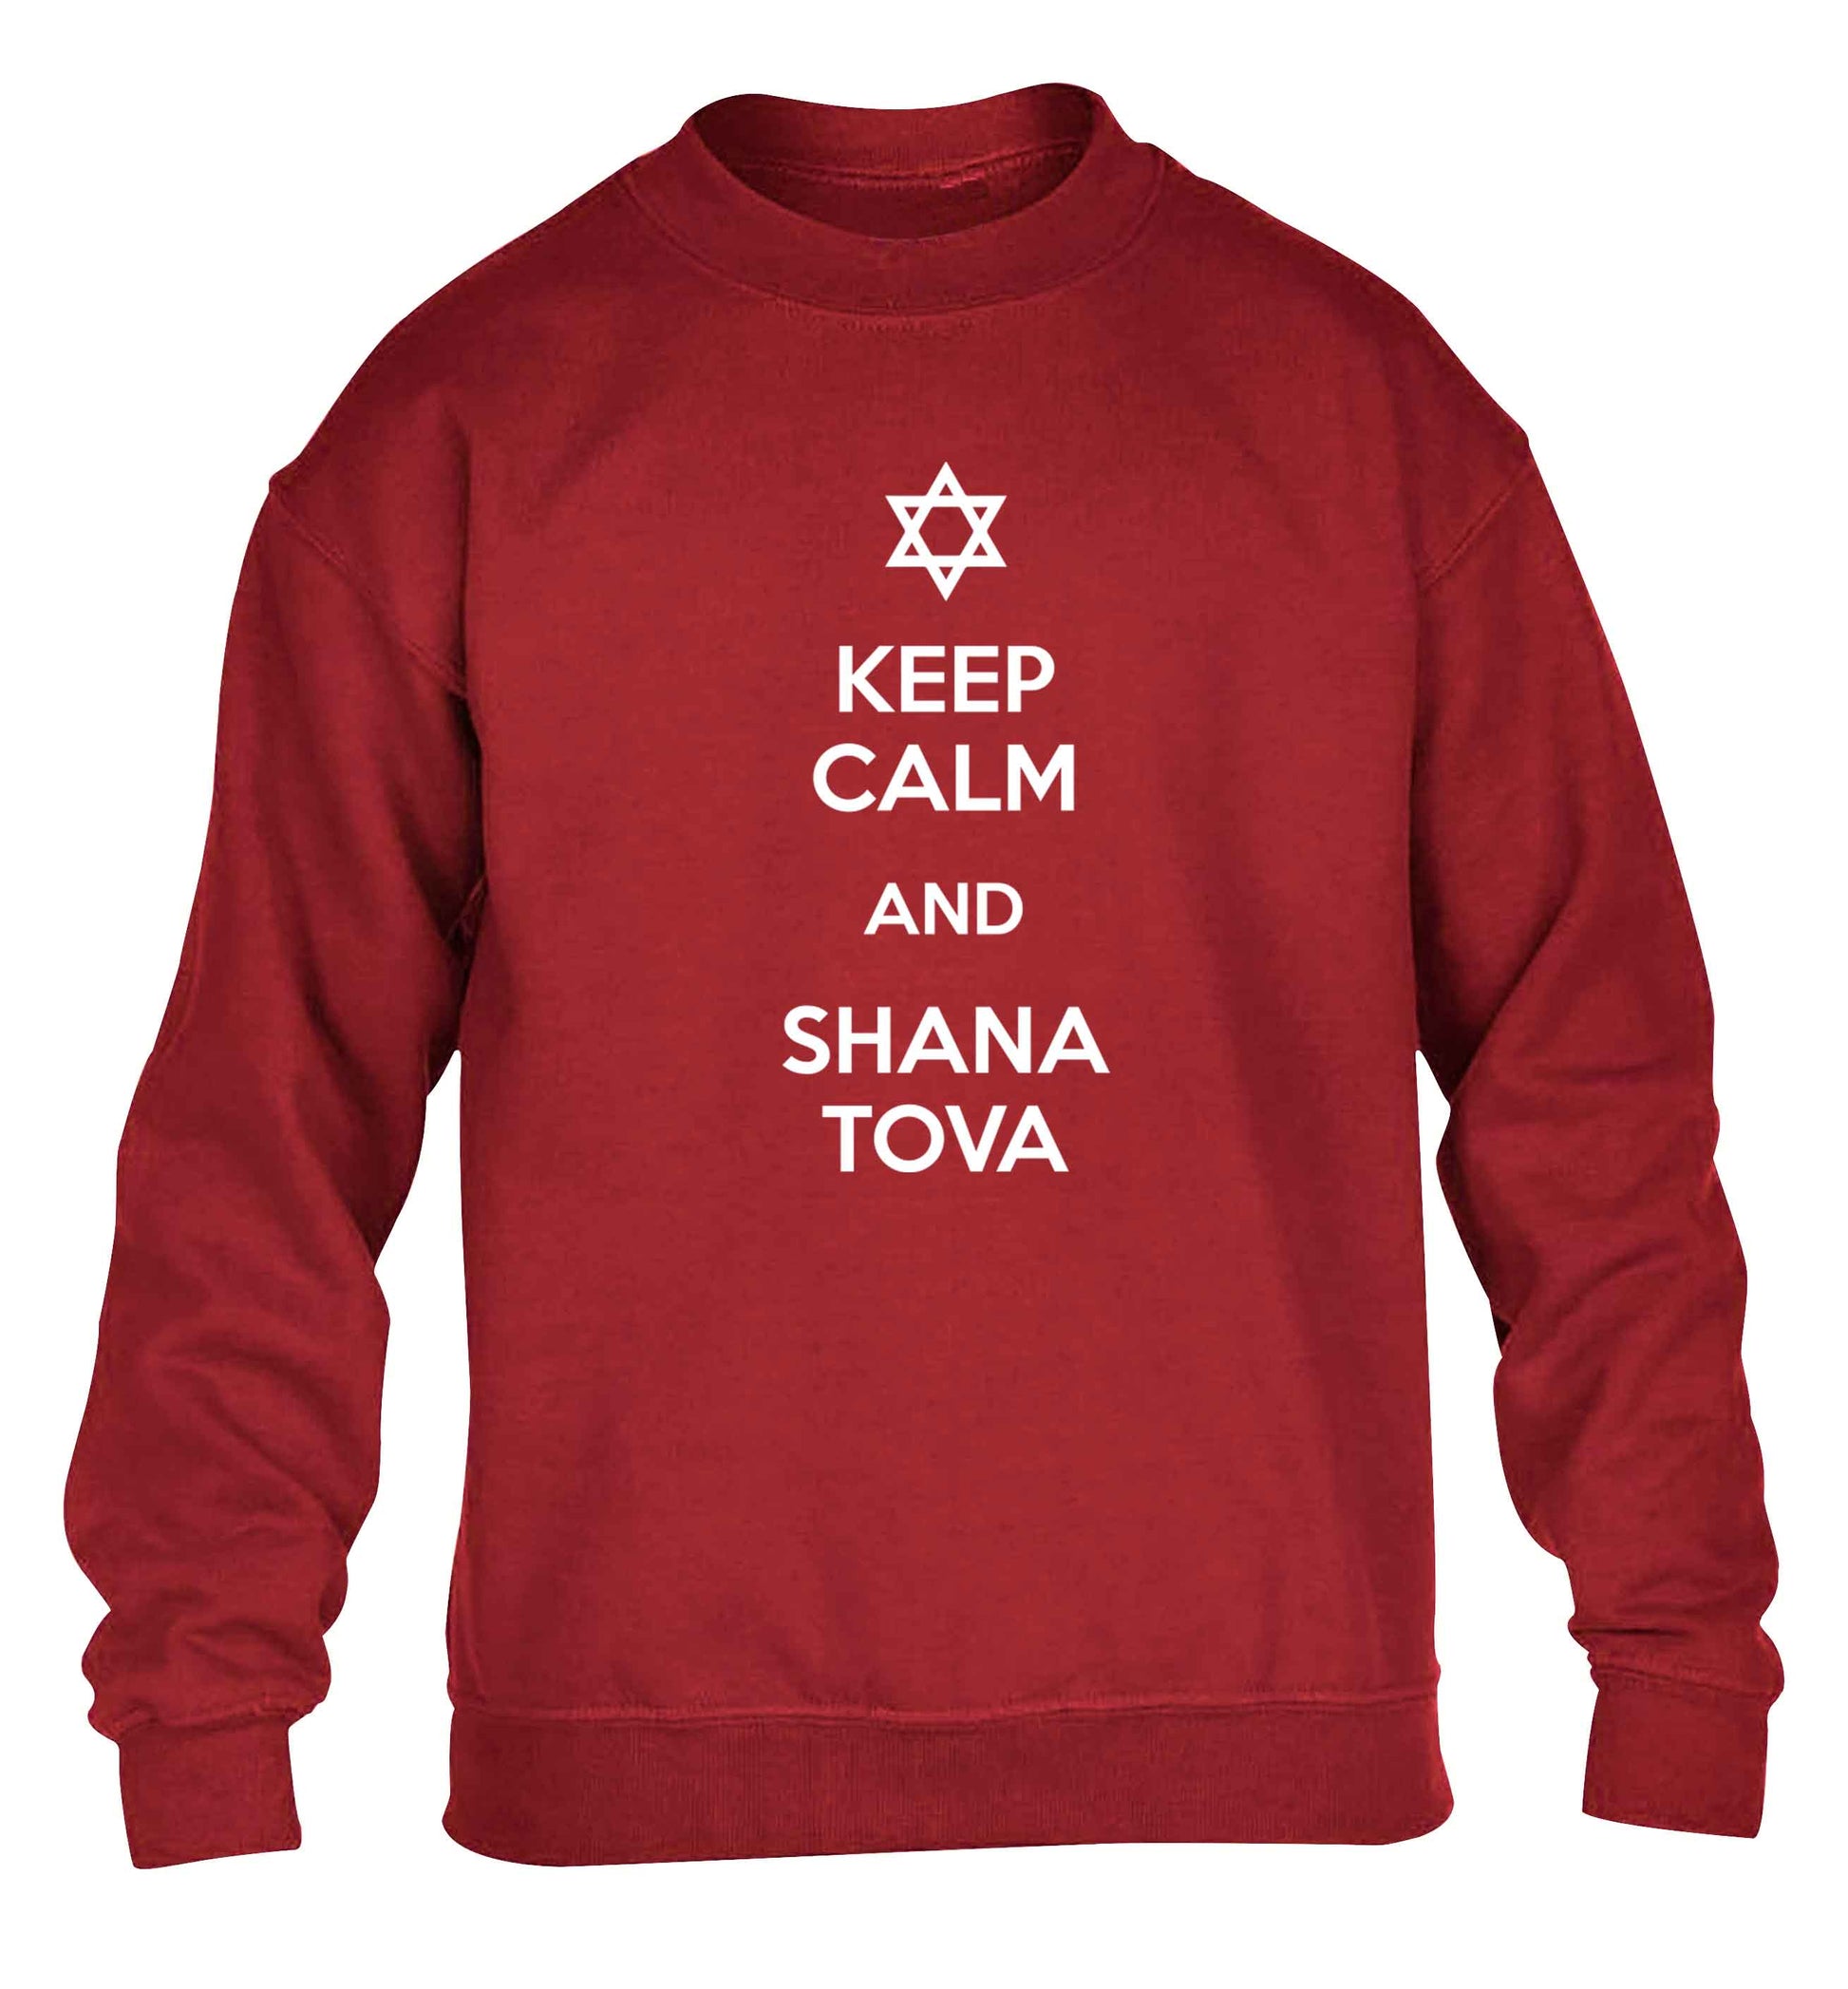 Keep calm and shana tova children's grey sweater 12-13 Years